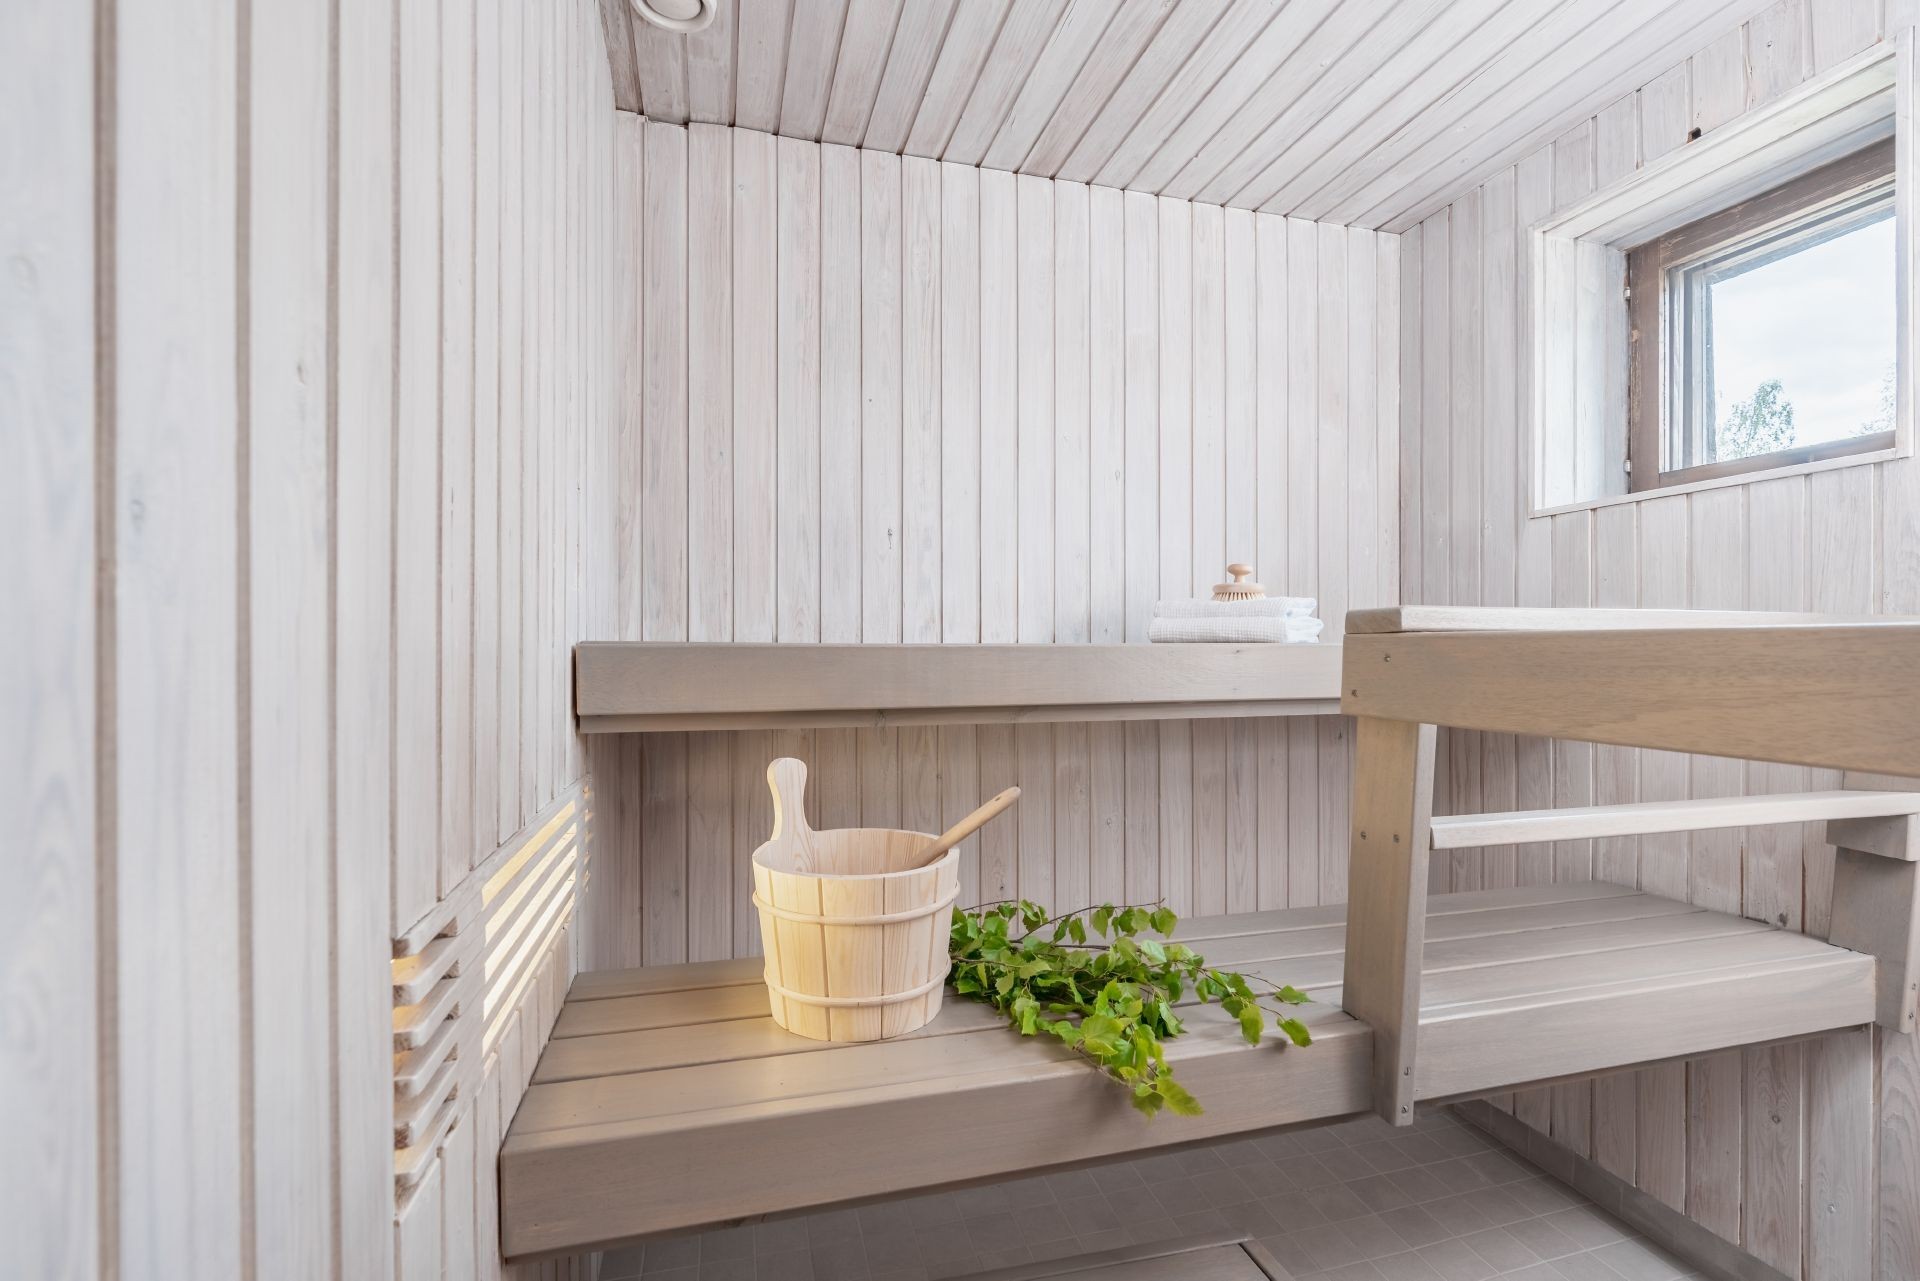 How to freshen up sauna with a new shade - sauna waxing | Tikkurila